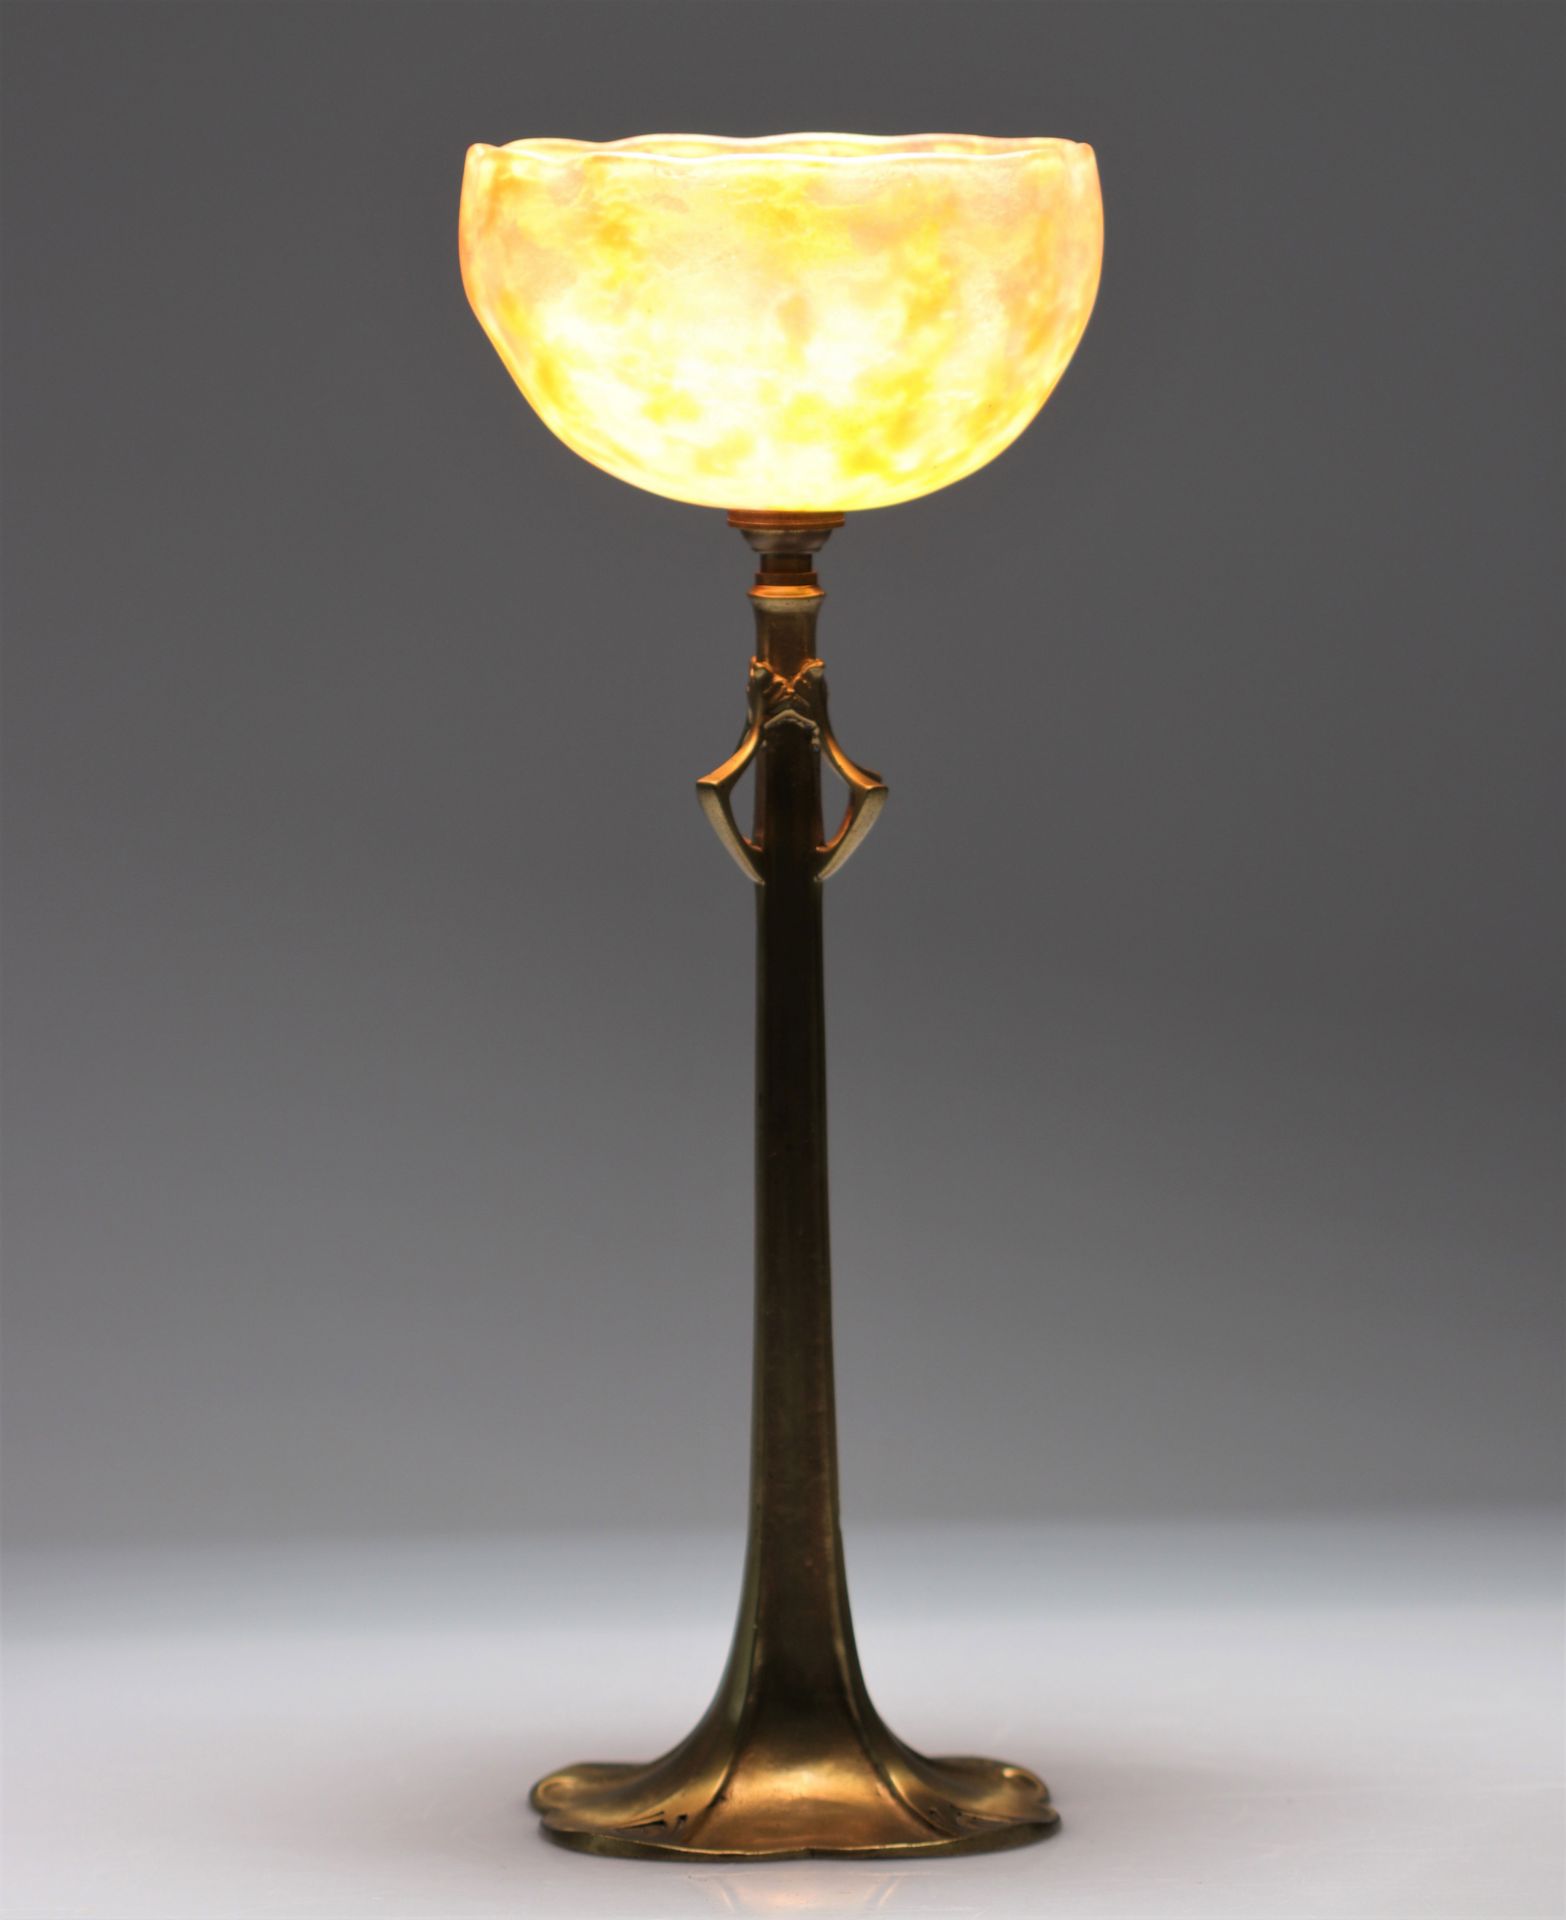 Daum Nancy & Louis Majorelle Table lamp 1900